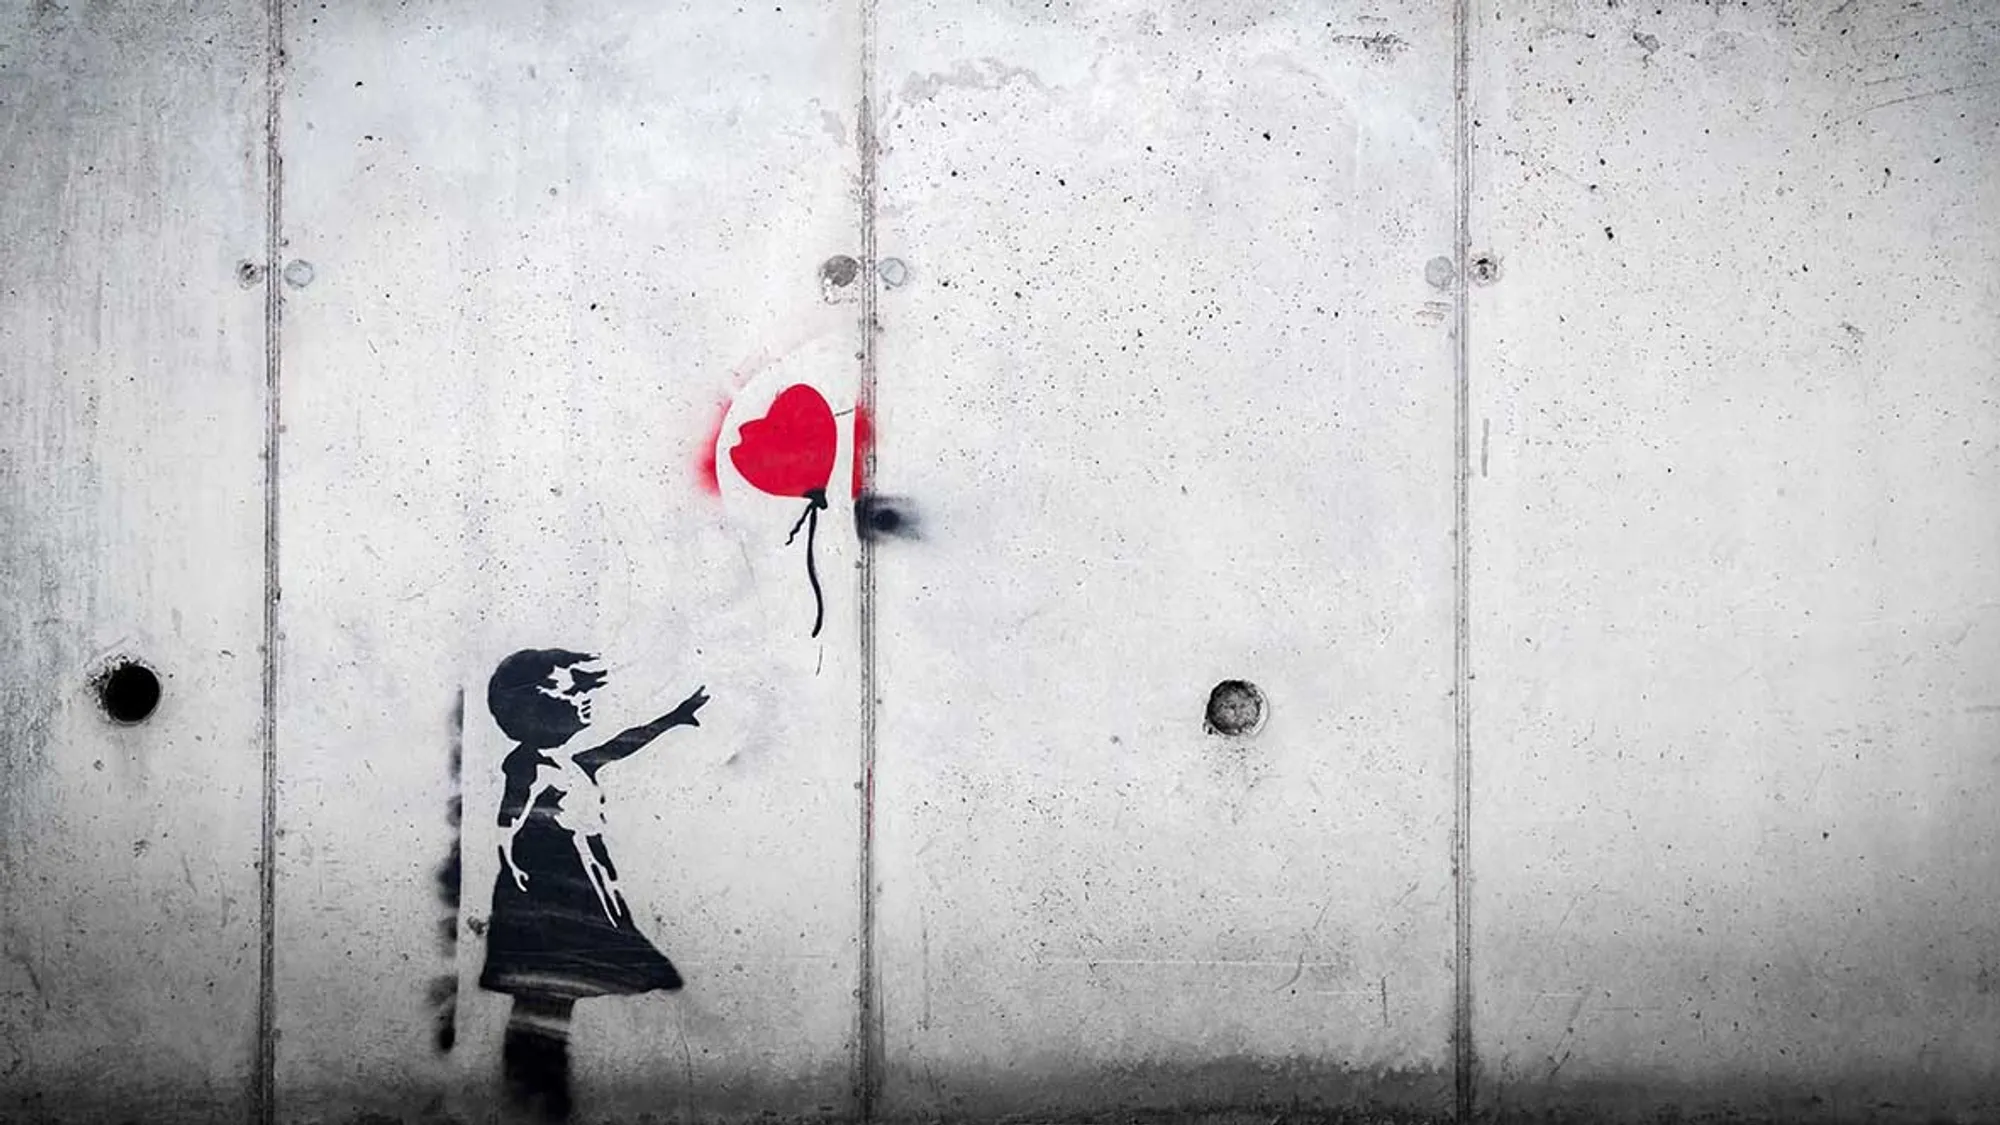 Wandbemalung: Mädchen und roter Balloon